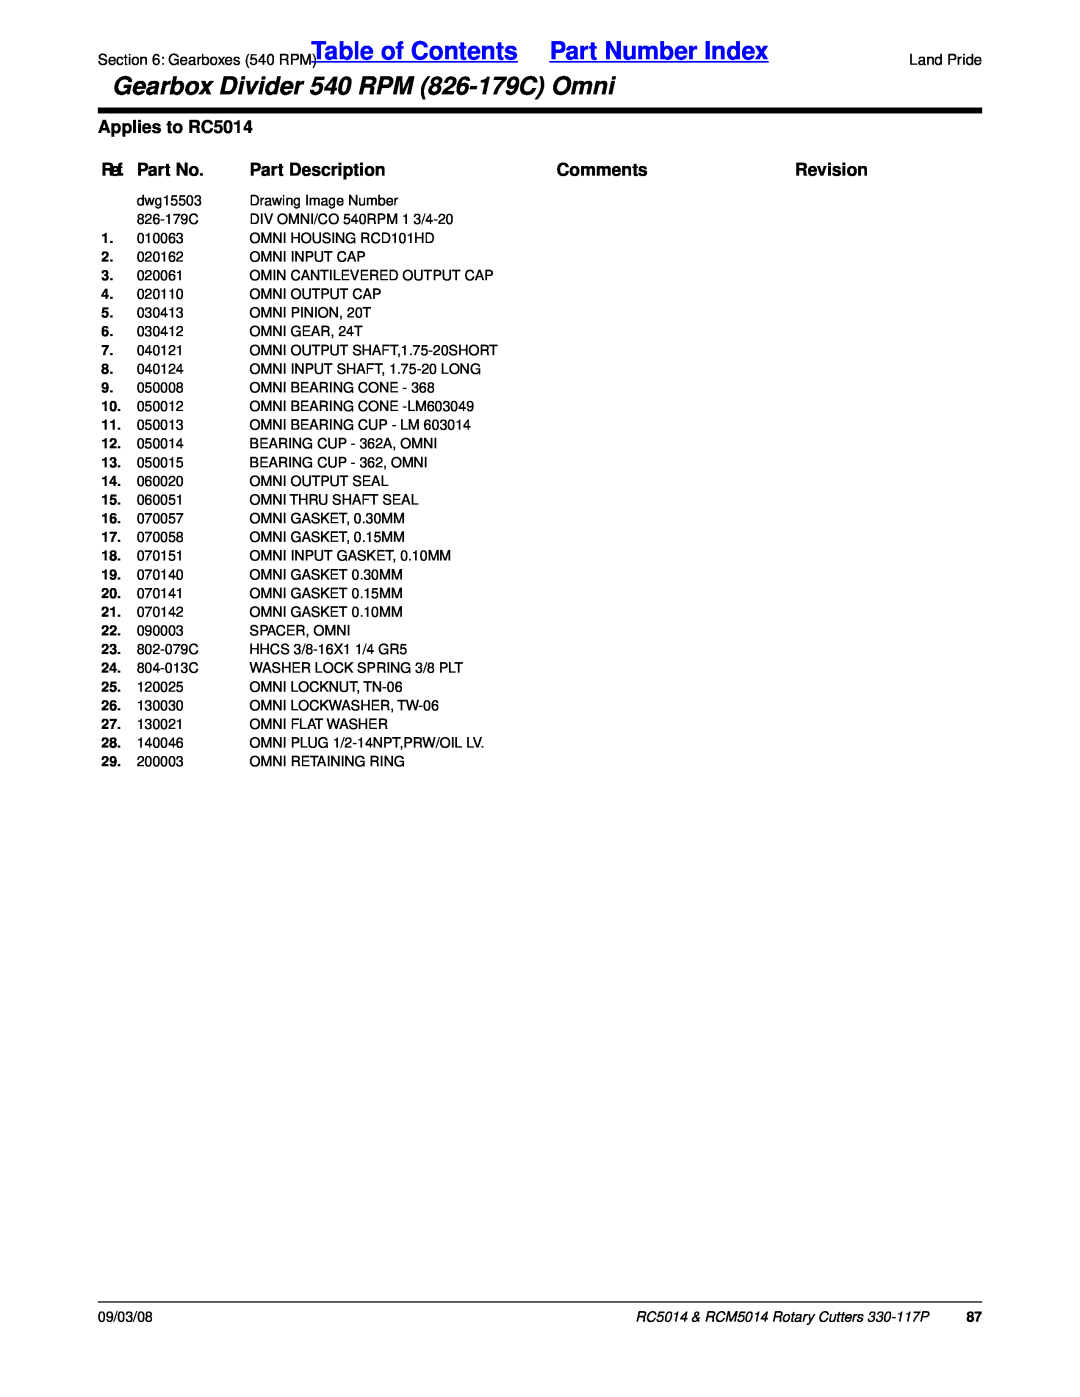 Land Pride RCM5014 Part Number Index, Gearbox Divider 540 RPM 826-179COmni, Applies to RC5014, Ref. Part No, Comments 